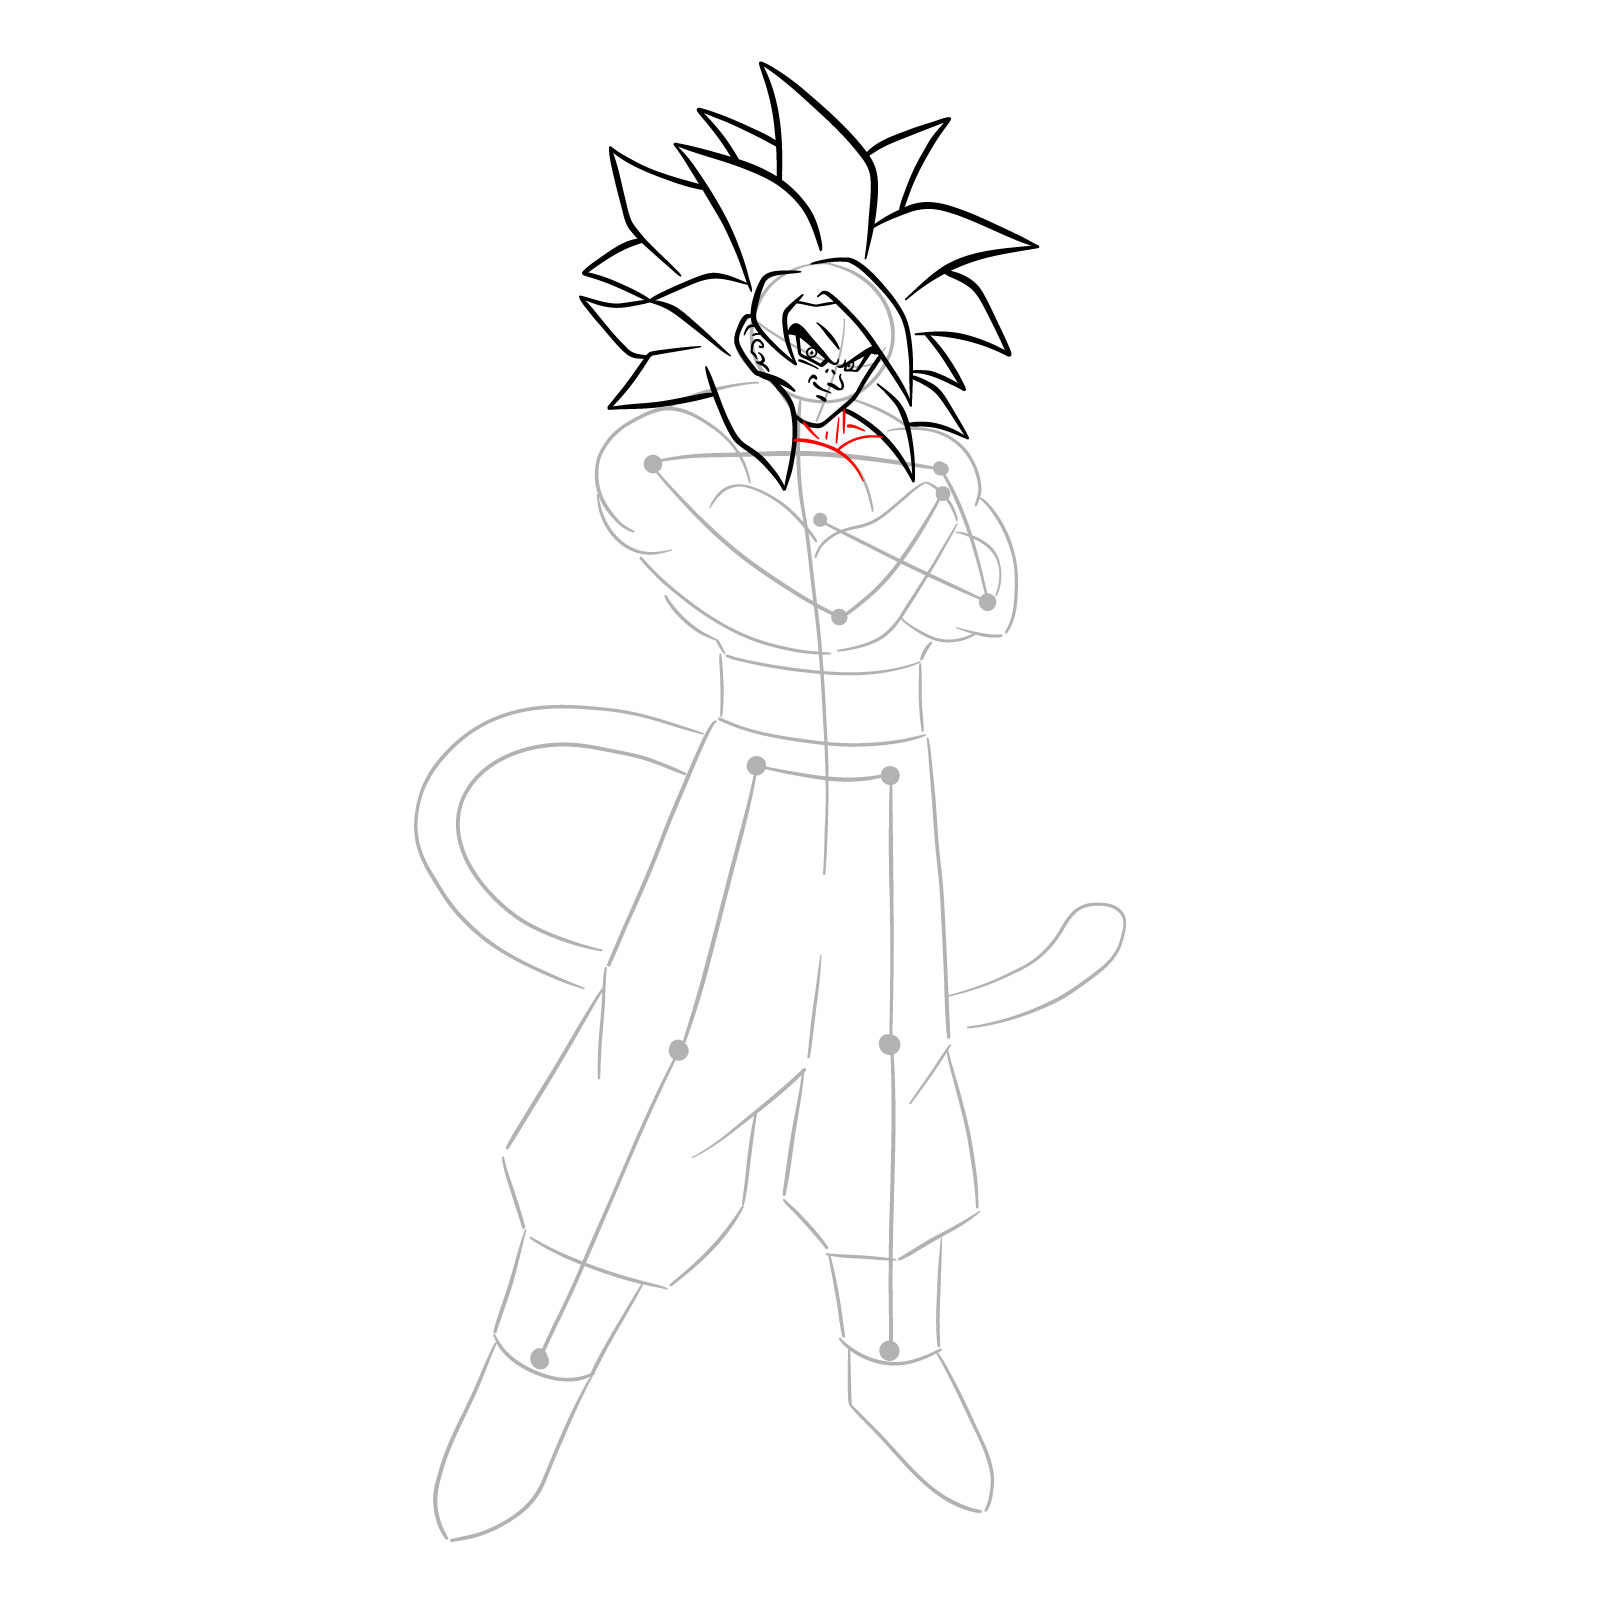 How to tát draw Goku Super Saiyan 4 - step 14